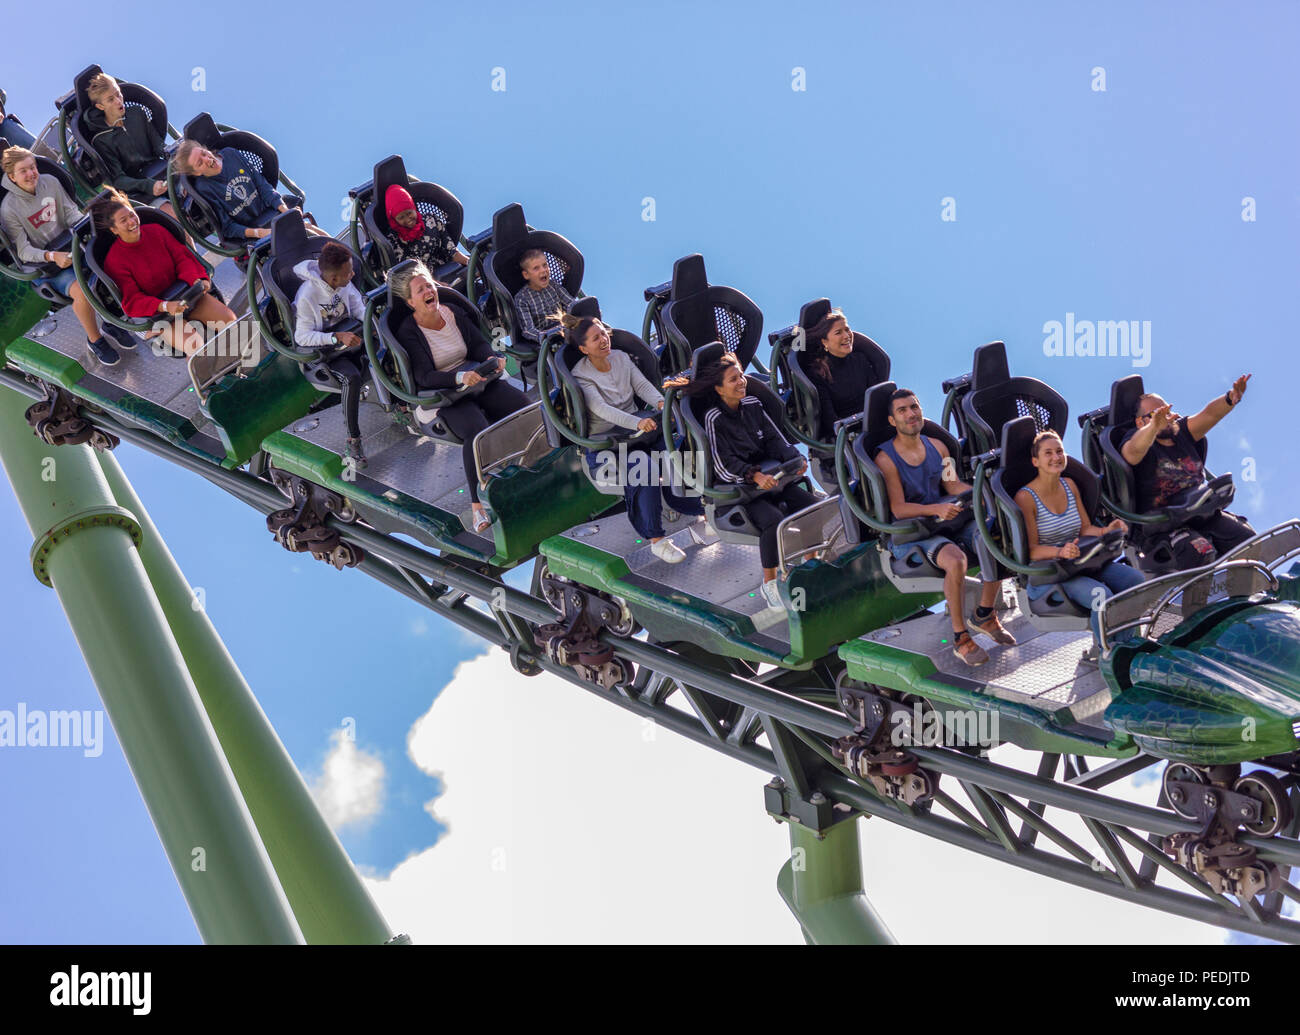 Helix roller coaster at Liseberg set against blue sky Stock Photo